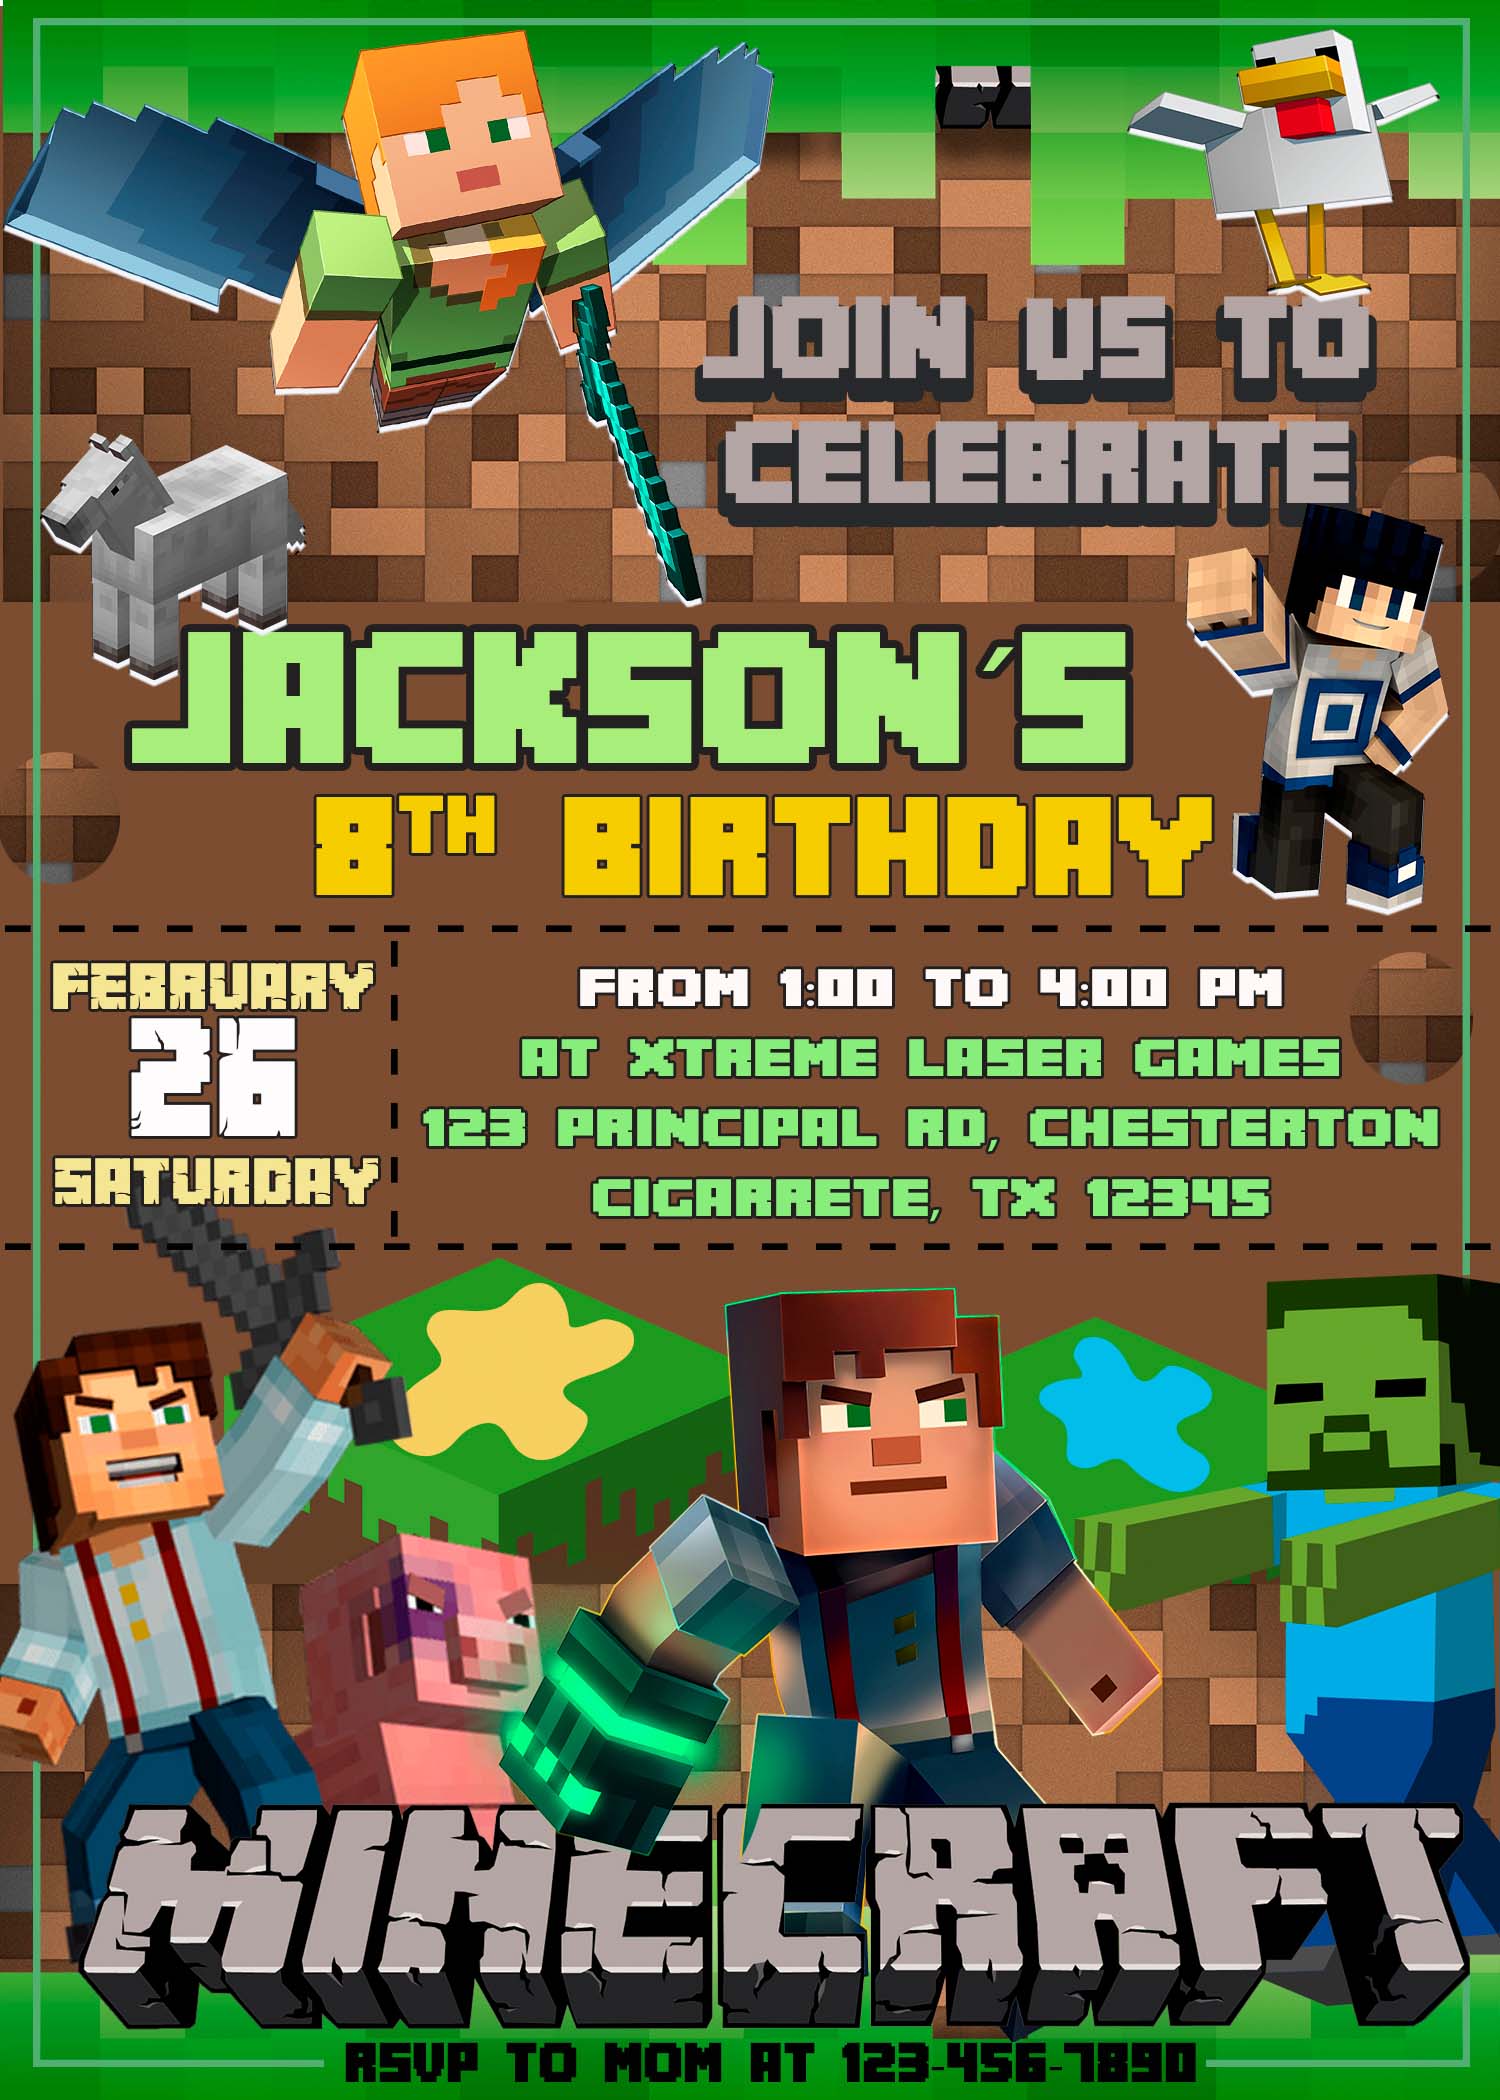 Minecraft Birthday Party (with Free Printables) - Elva M Design Studio